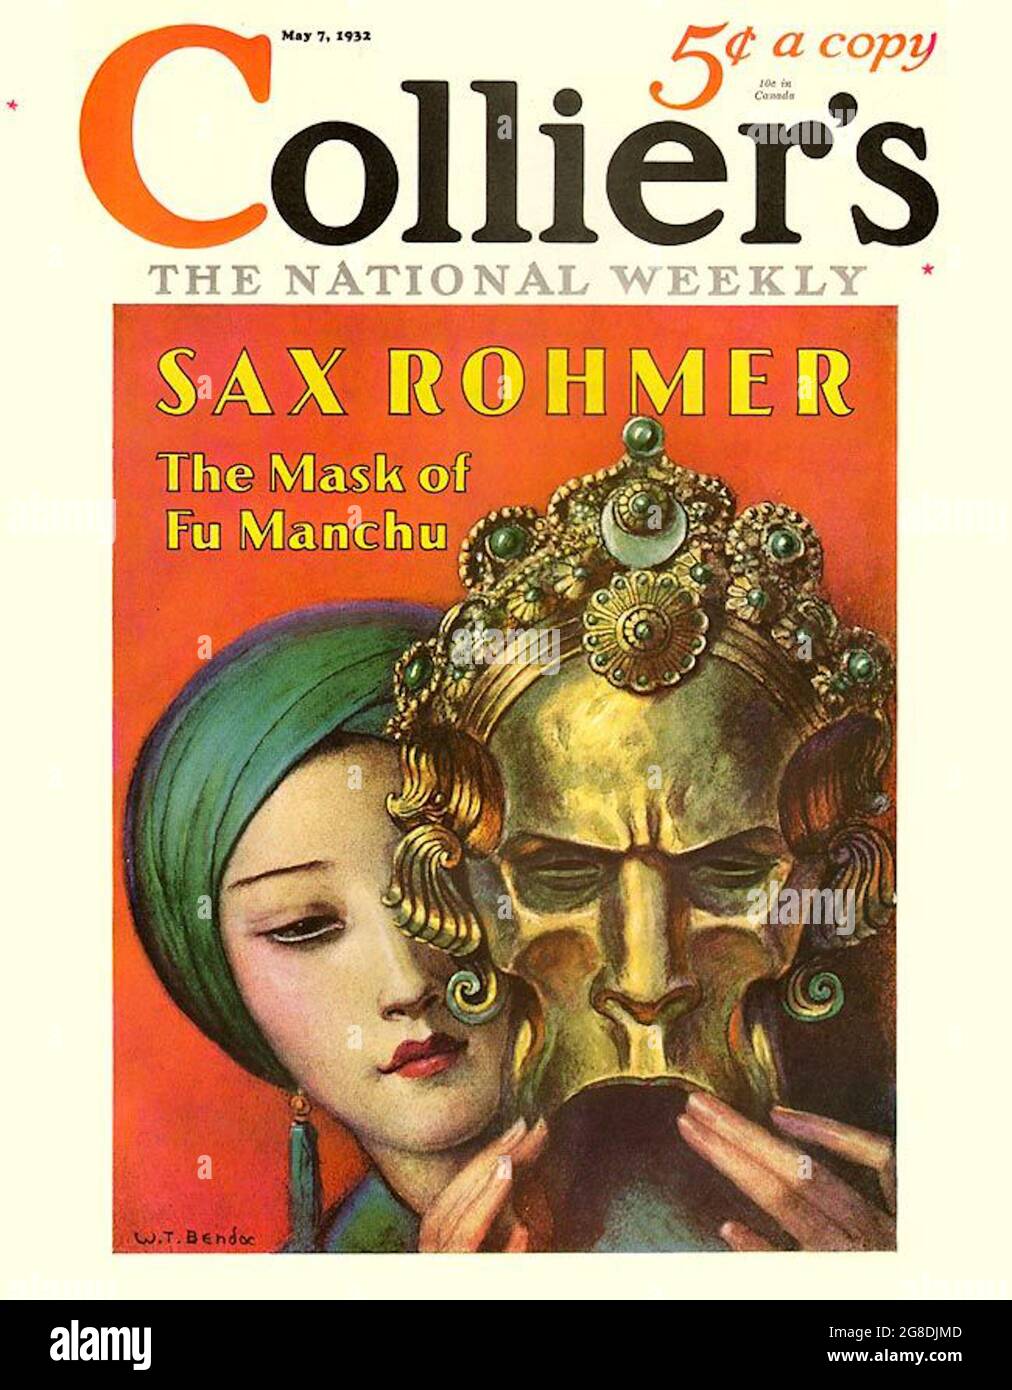 Władysław Teodor Benda's magazine cover design for Collier's The National Magazine - Sax Rohmer - The Mask of Fu Manchu. Stock Photo